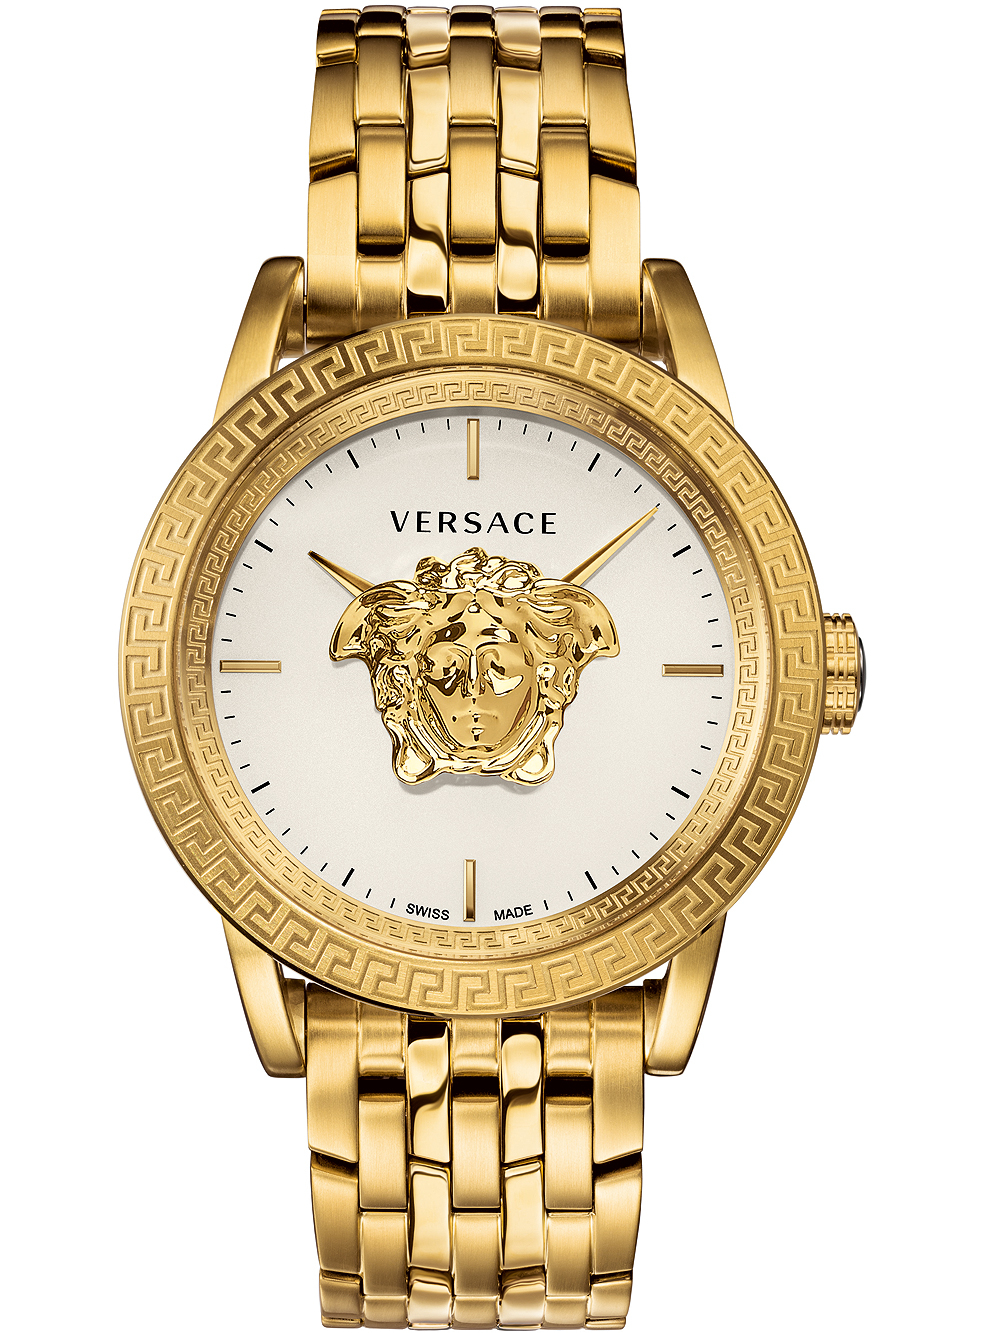 Pánské hodinky Versace VERD00318 Plazzo Empire